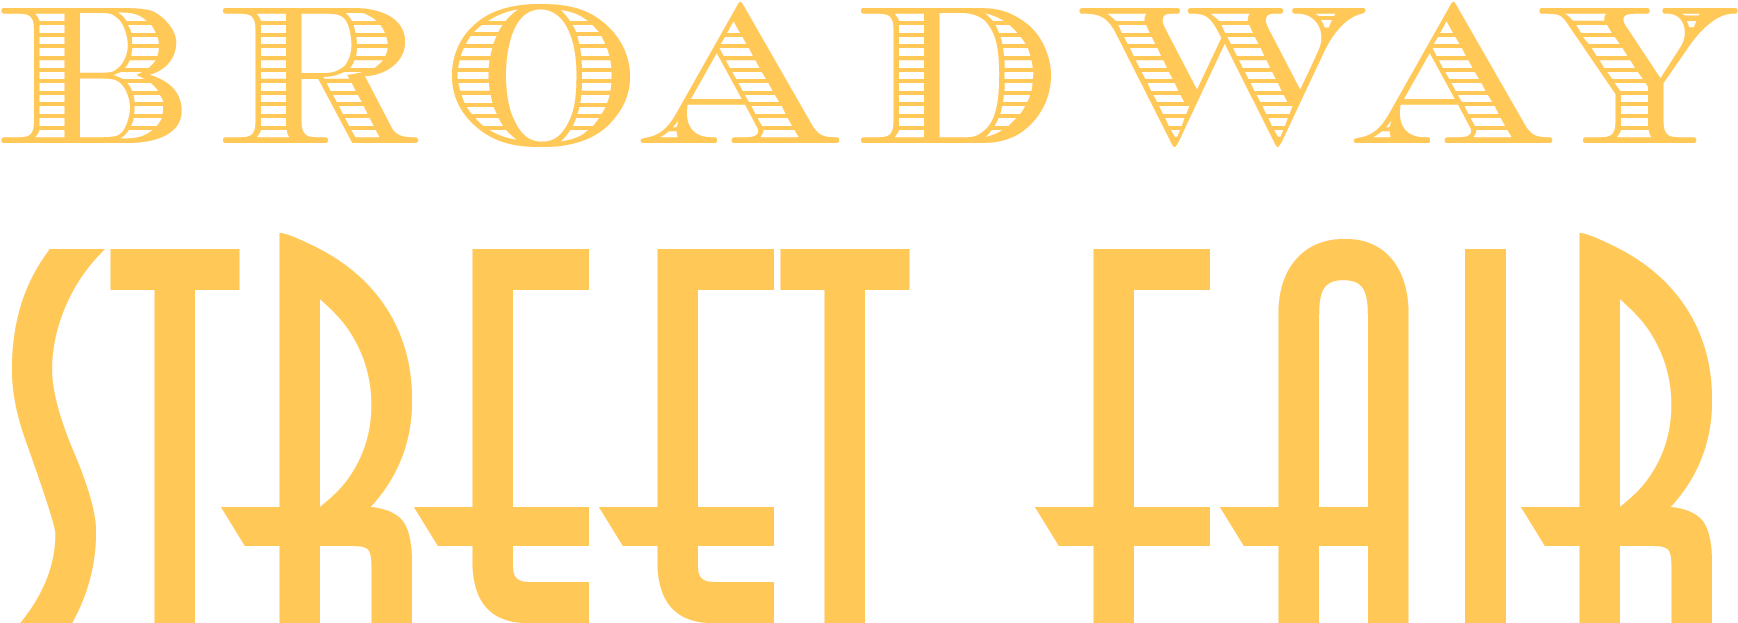 Broadway Street Fair Logo PNG